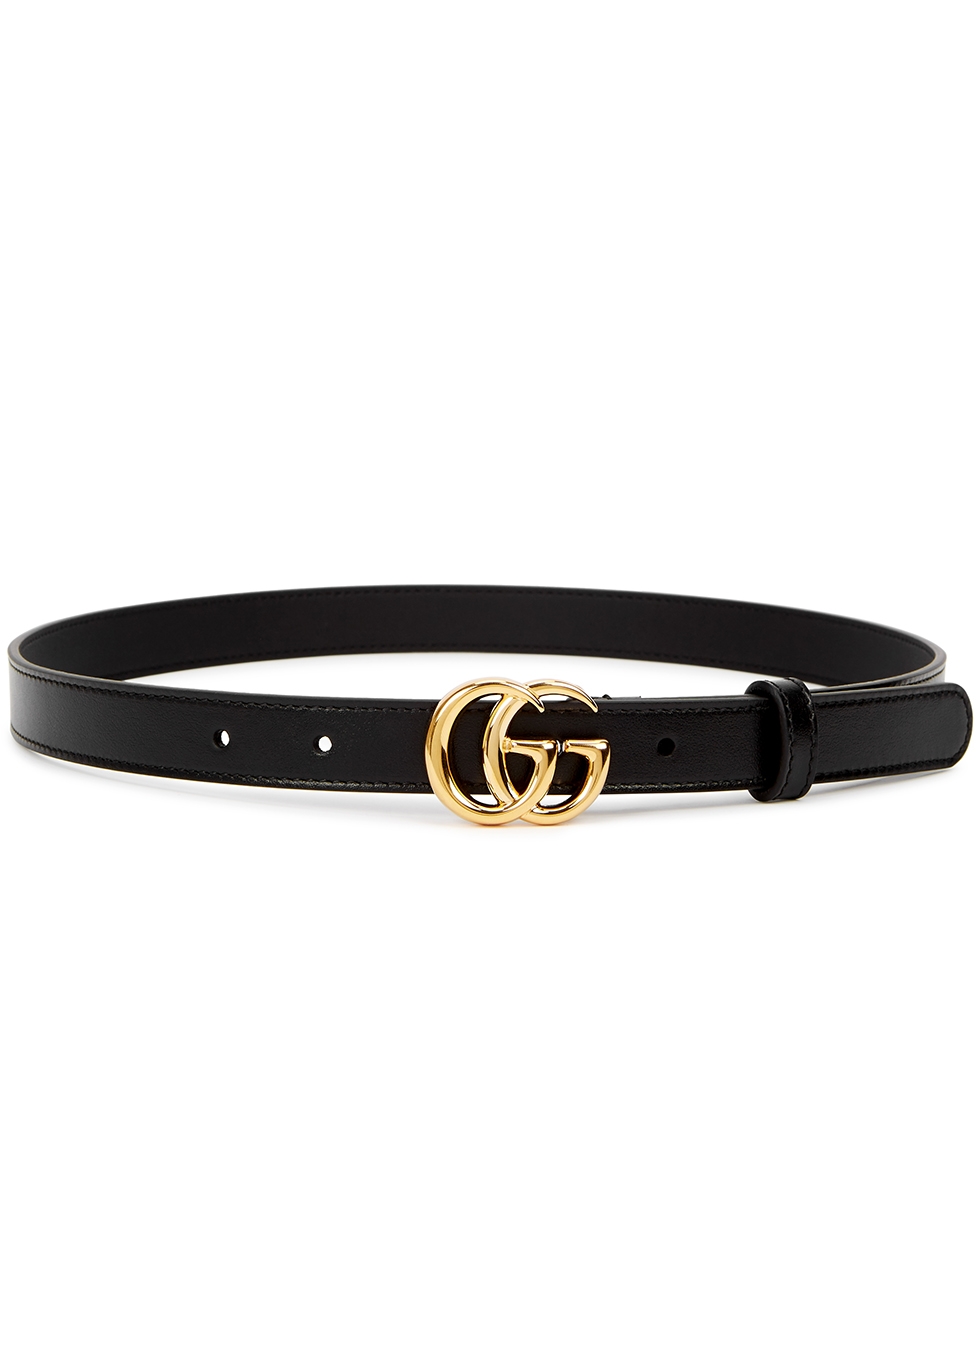 Gucci GG black leather belt - Harvey Nichols